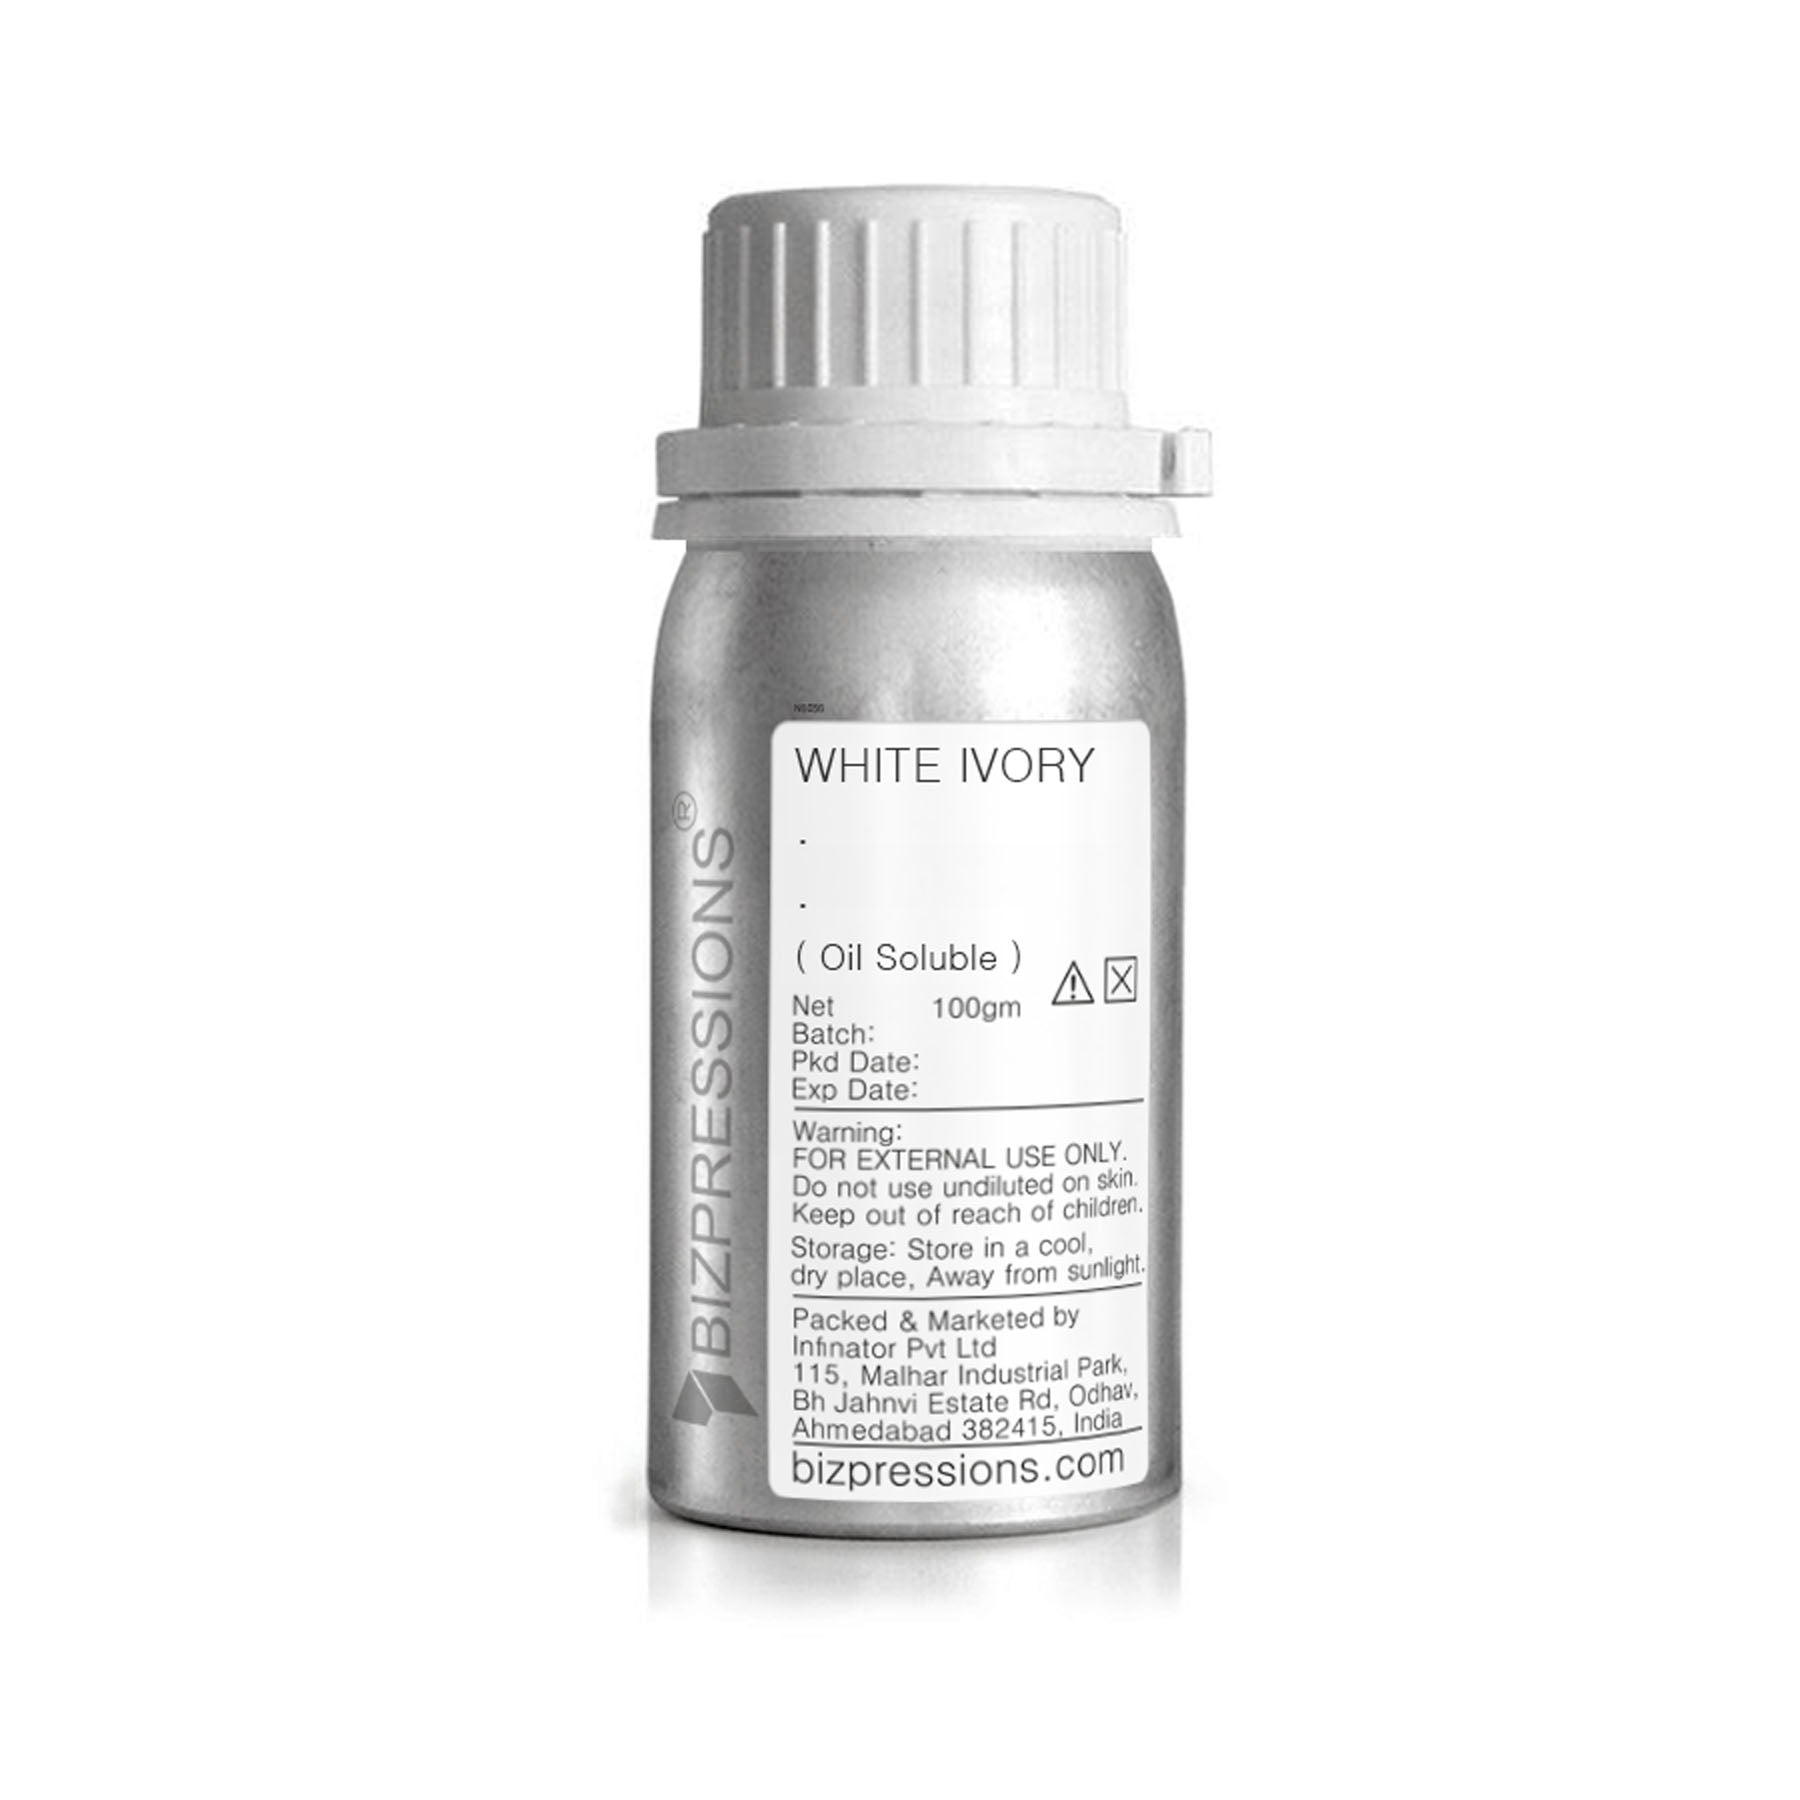 WHITE IVORY - Fragrance ( Oil Soluble ) - 100 gm